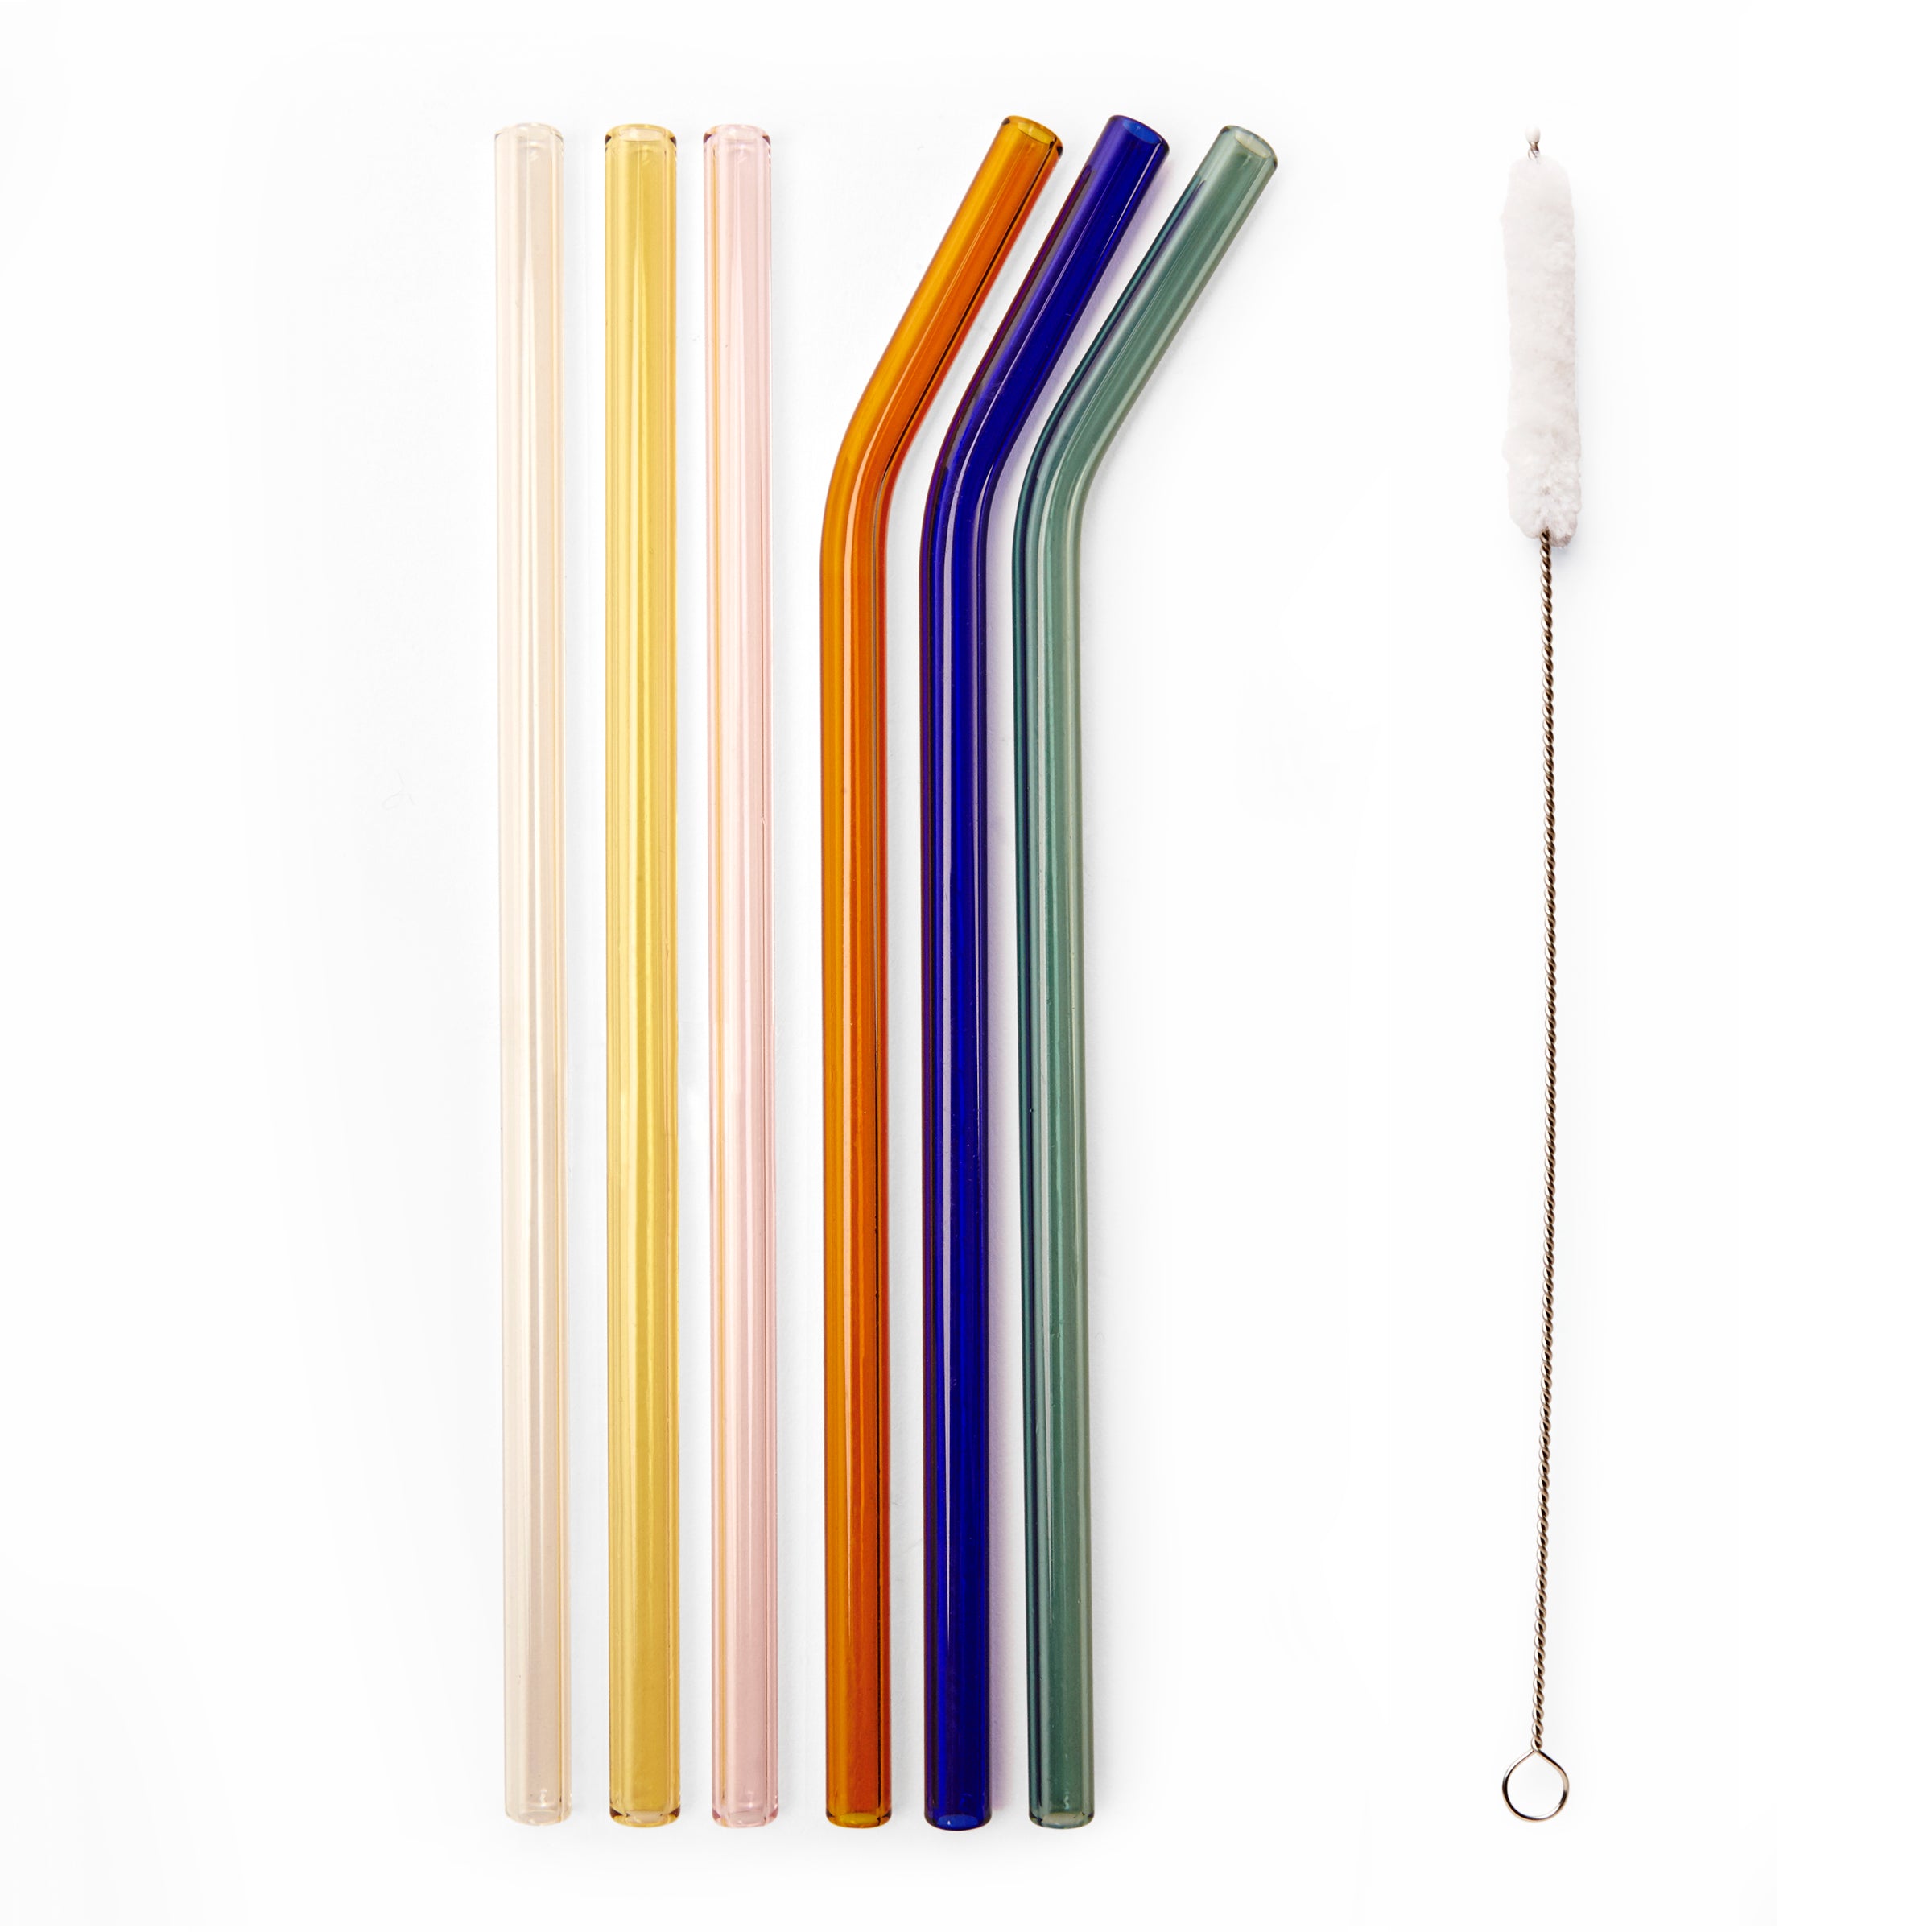 Handmade Crystal Glass Straws : Straw Design